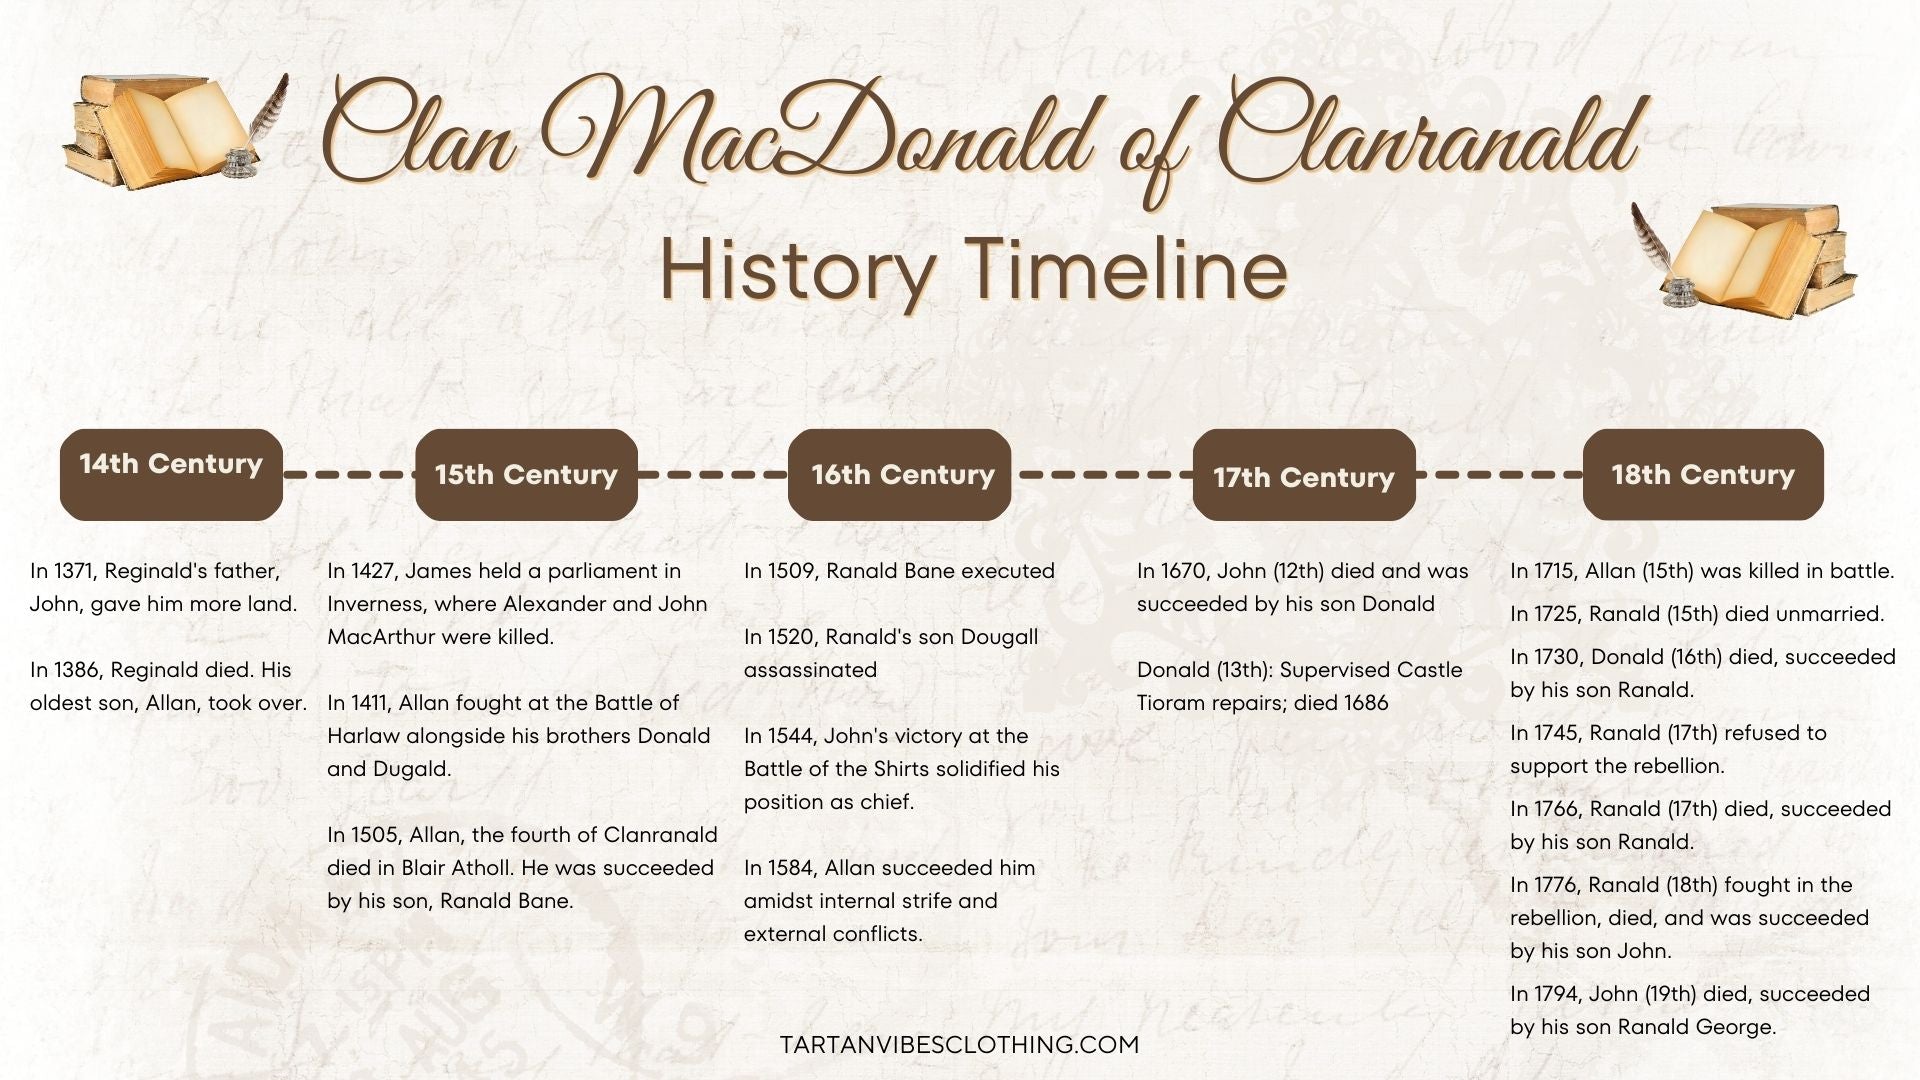 History of Clan MacDonald of Clanranald